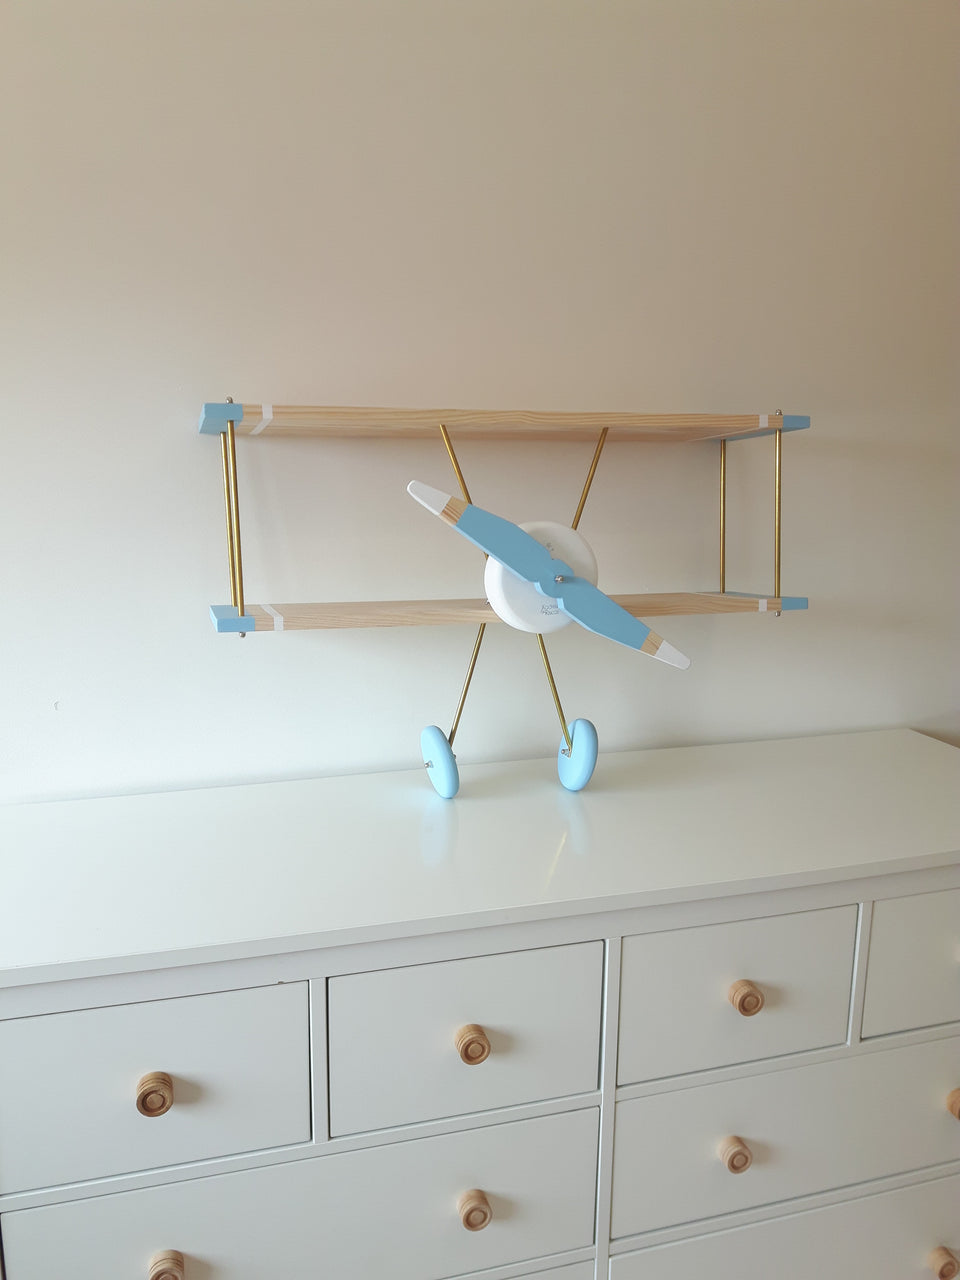 Prateleira Avioneta Azul Bebe - Baby Blue Airplane Shelf